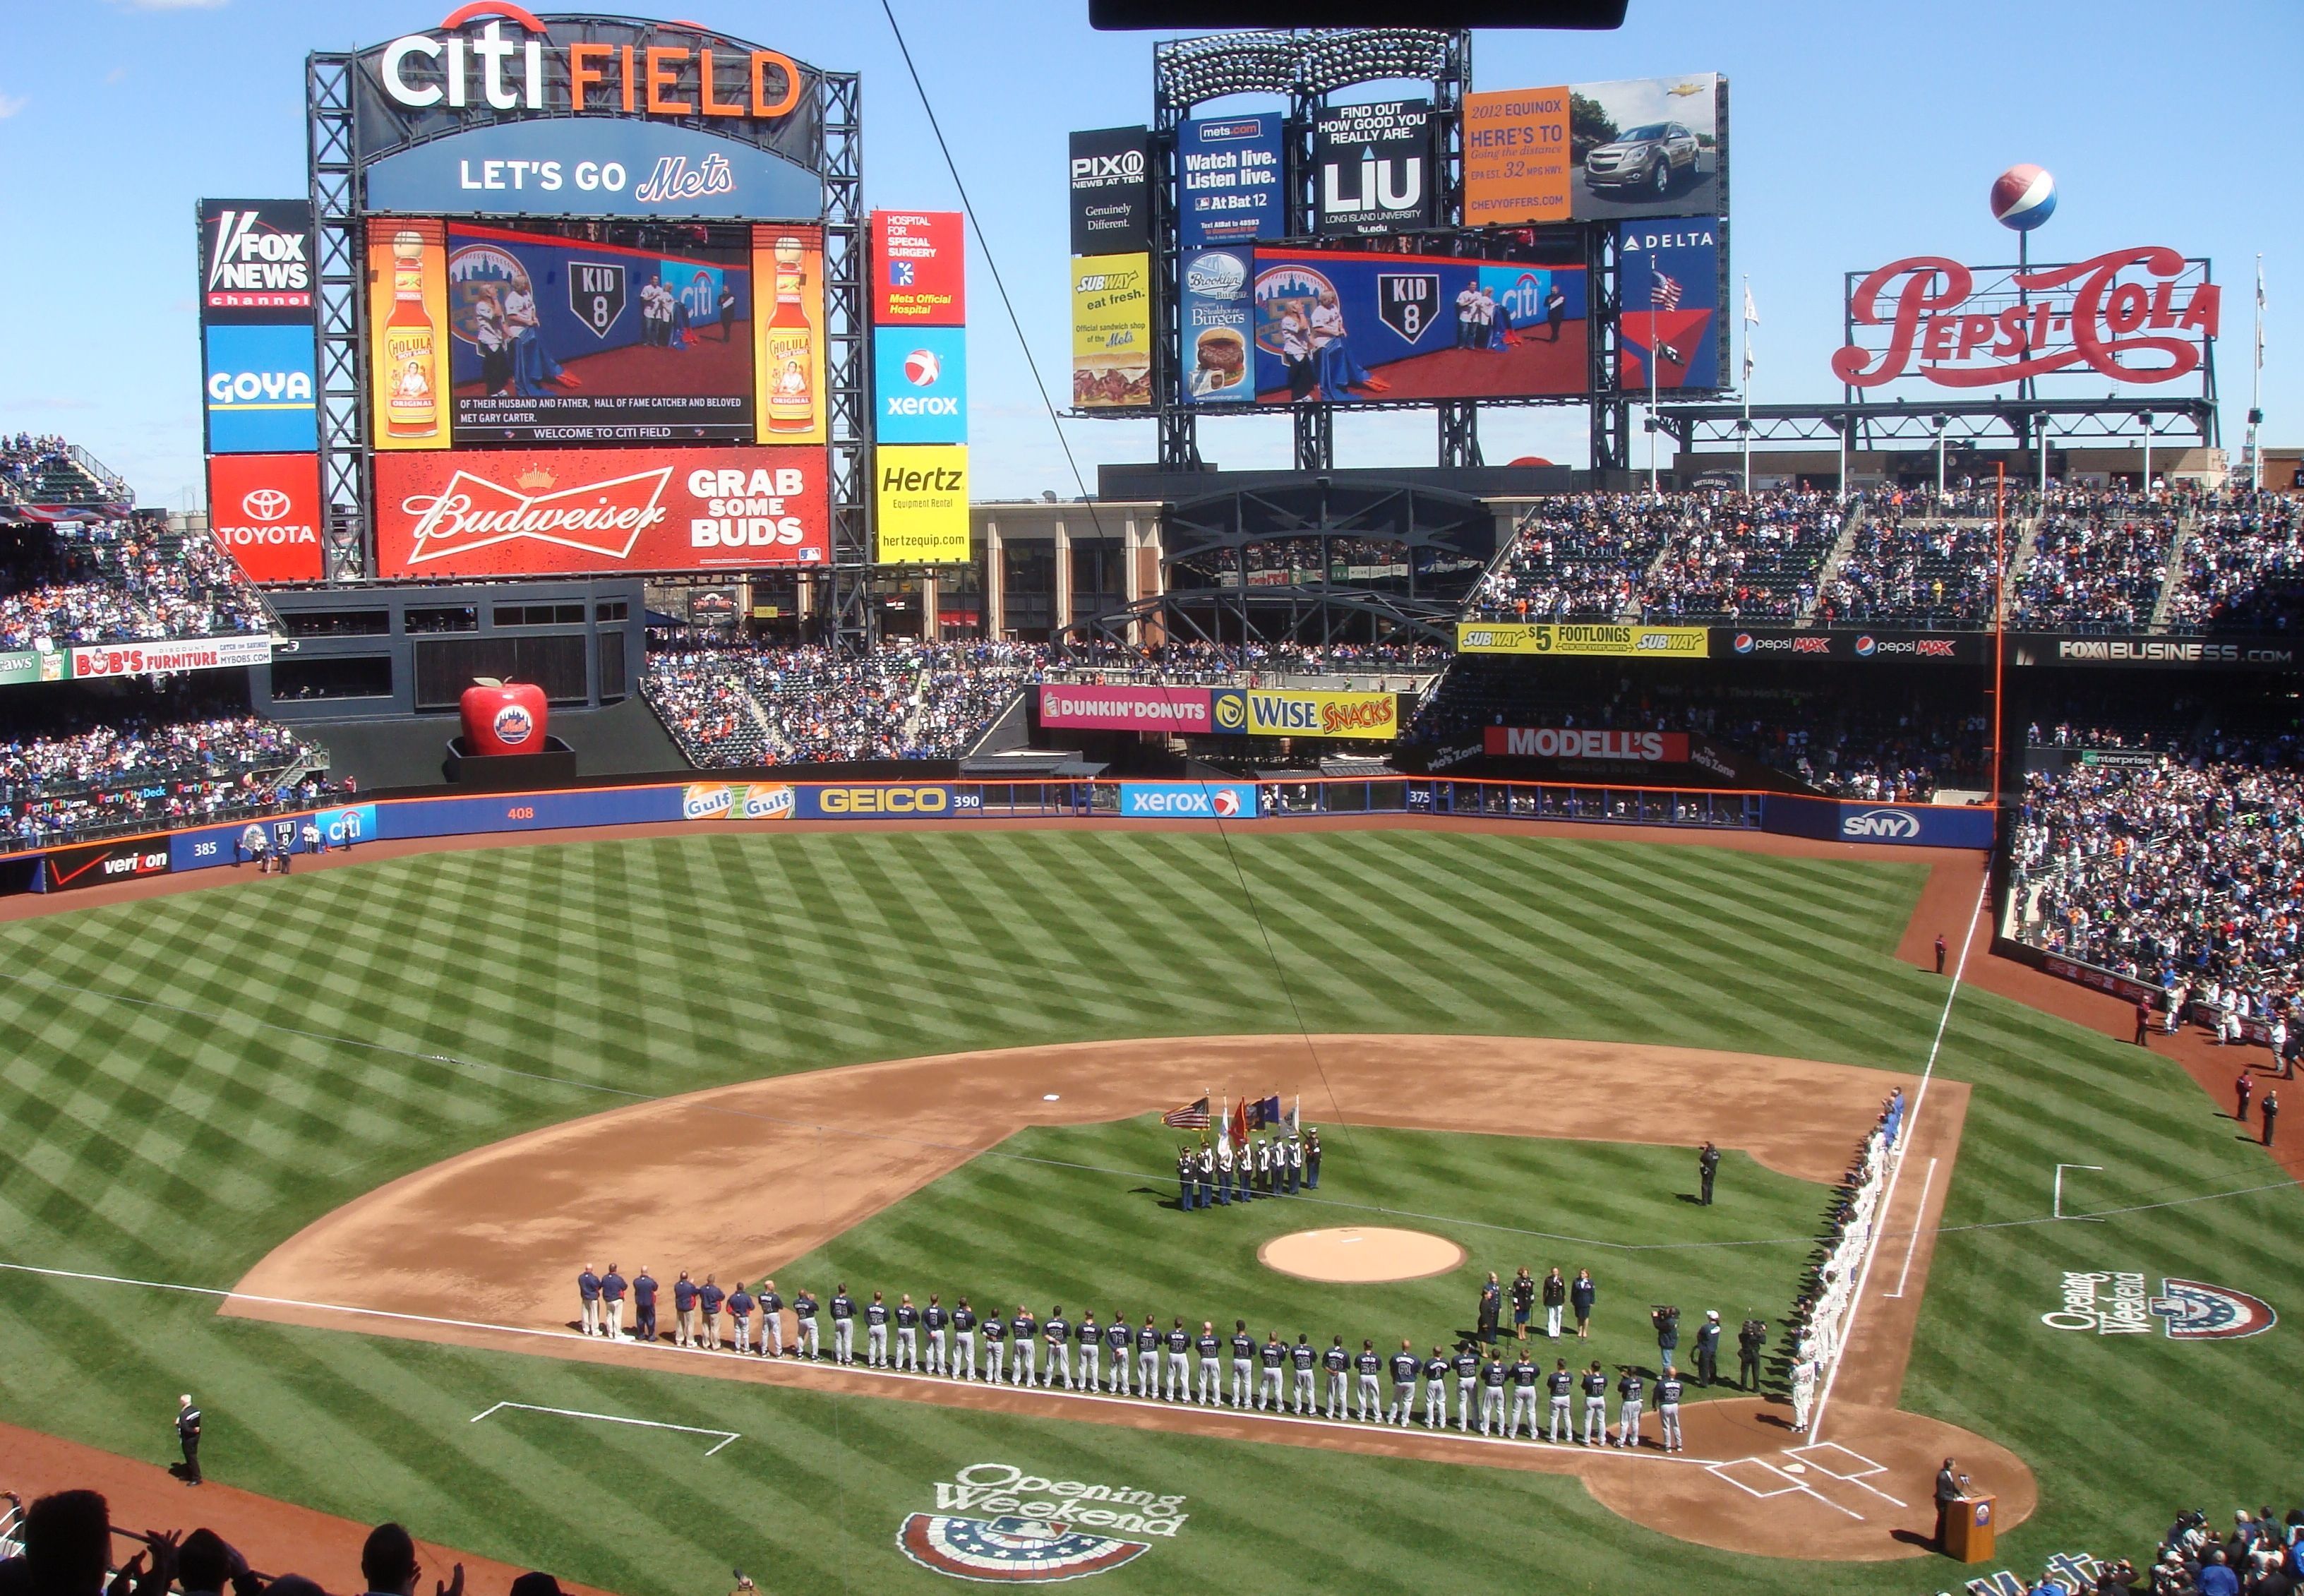 New York Mets' Citi Field. HD MLB Baseball